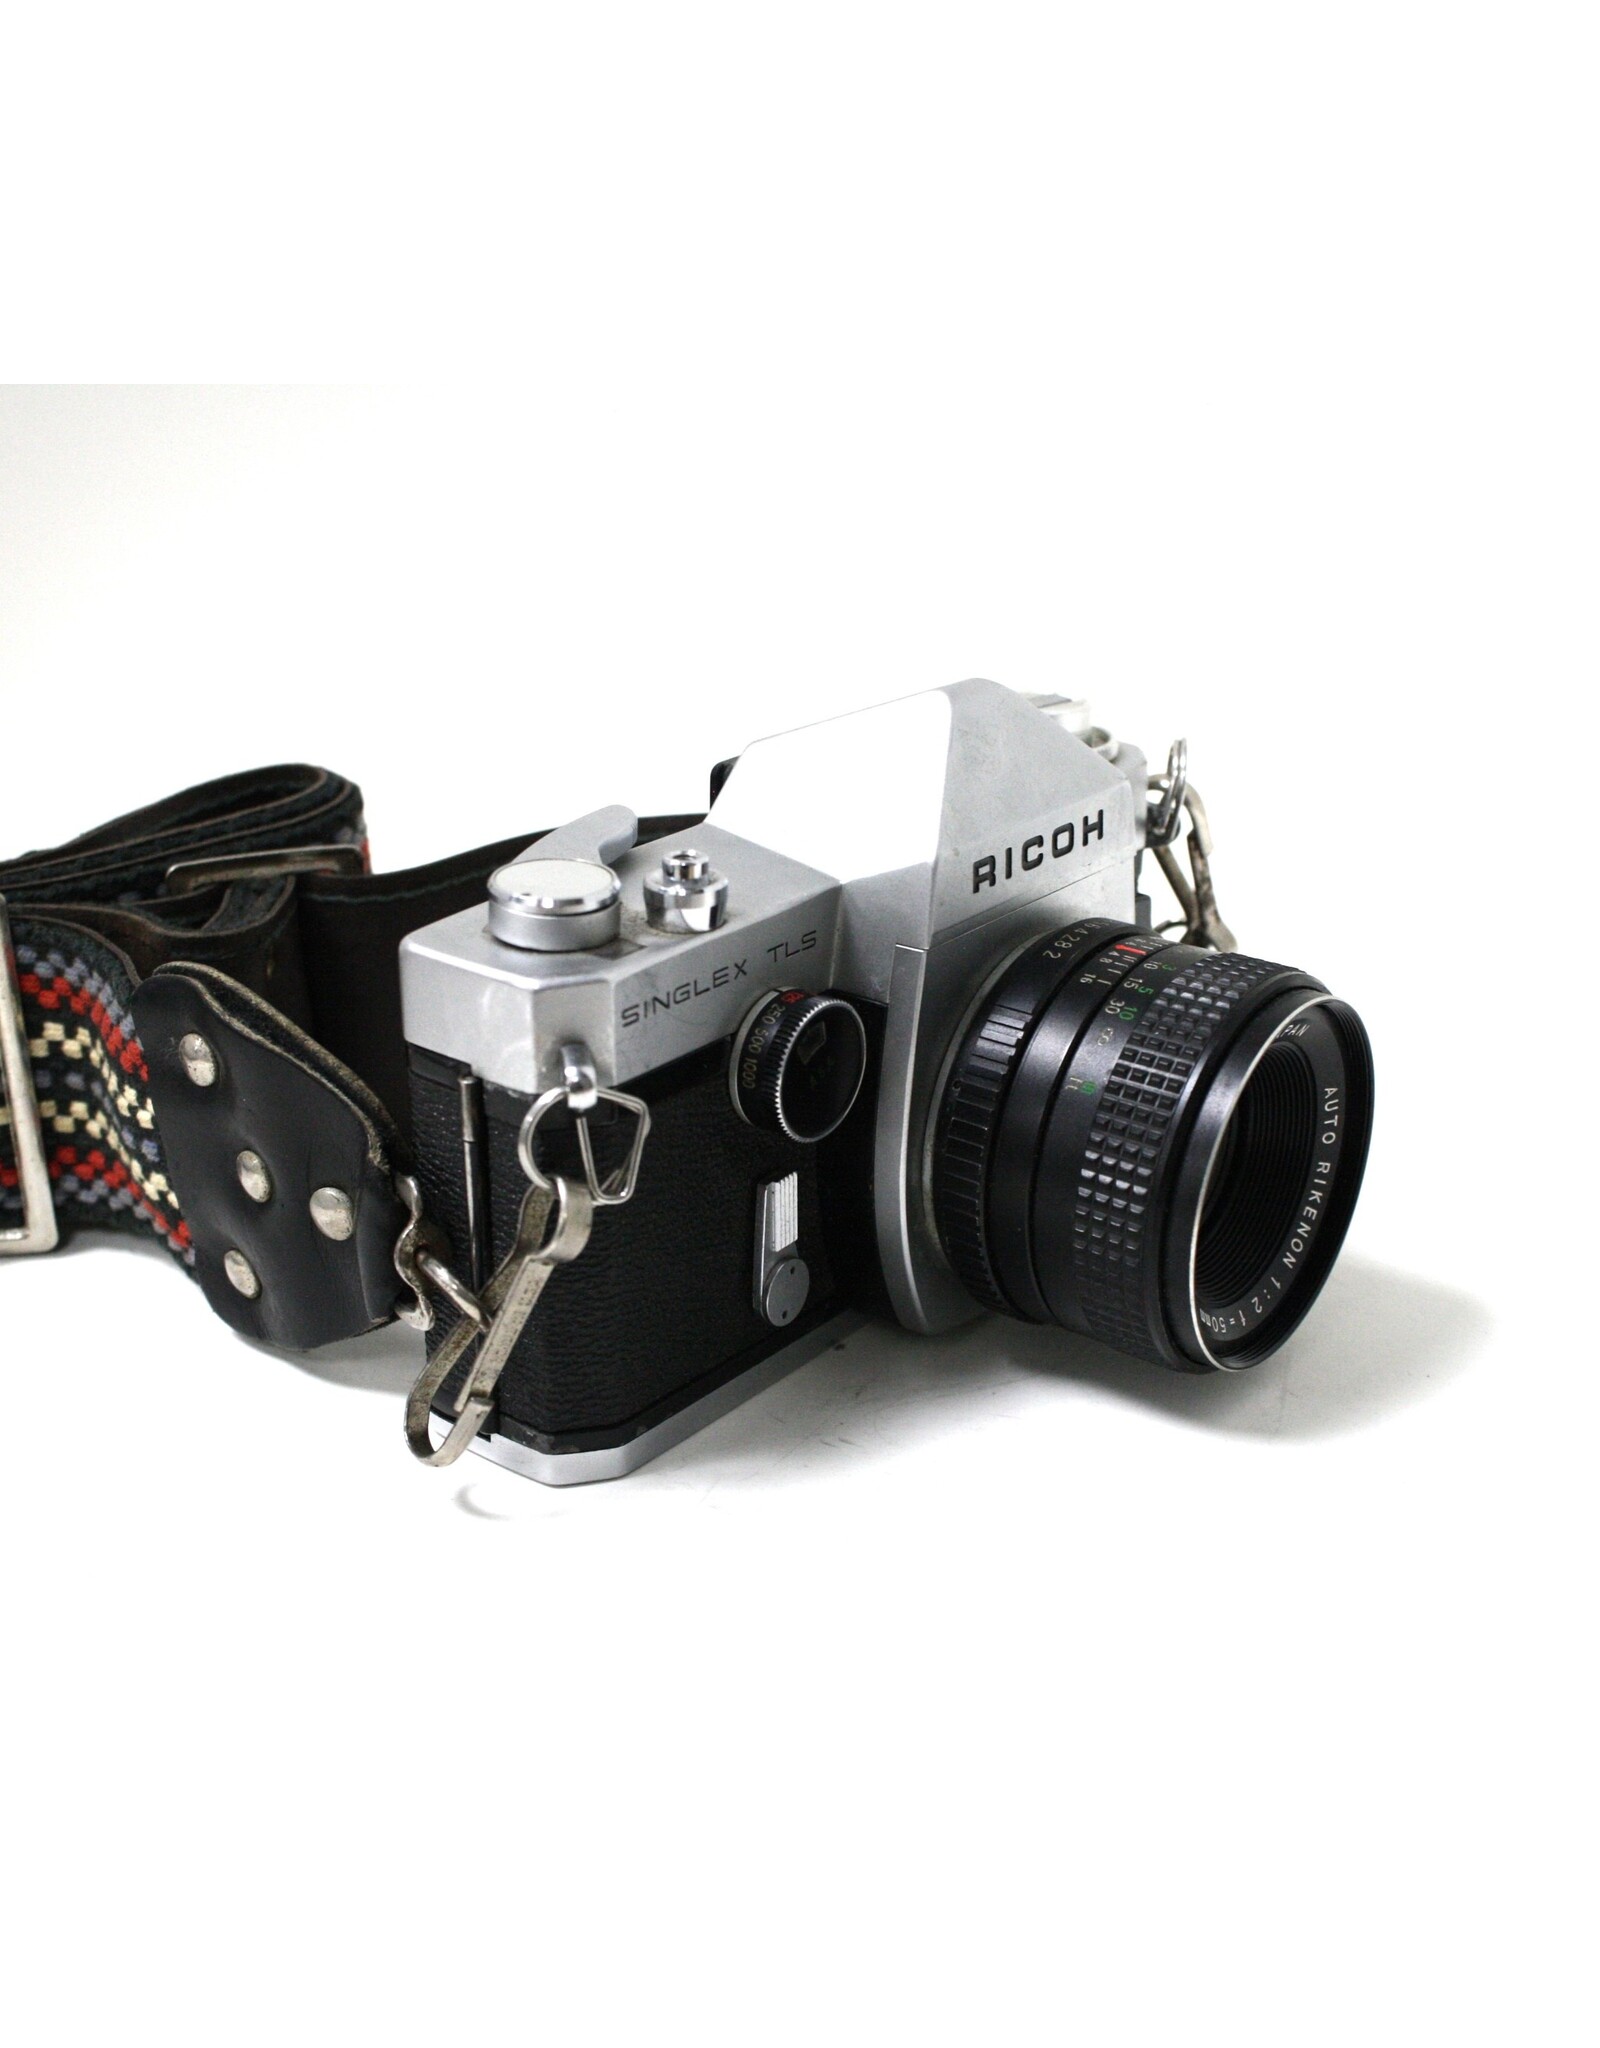 Ricoh Ricoh Singlex TLS 35mm Film SLR with 50mm f2 Rikenon Lens